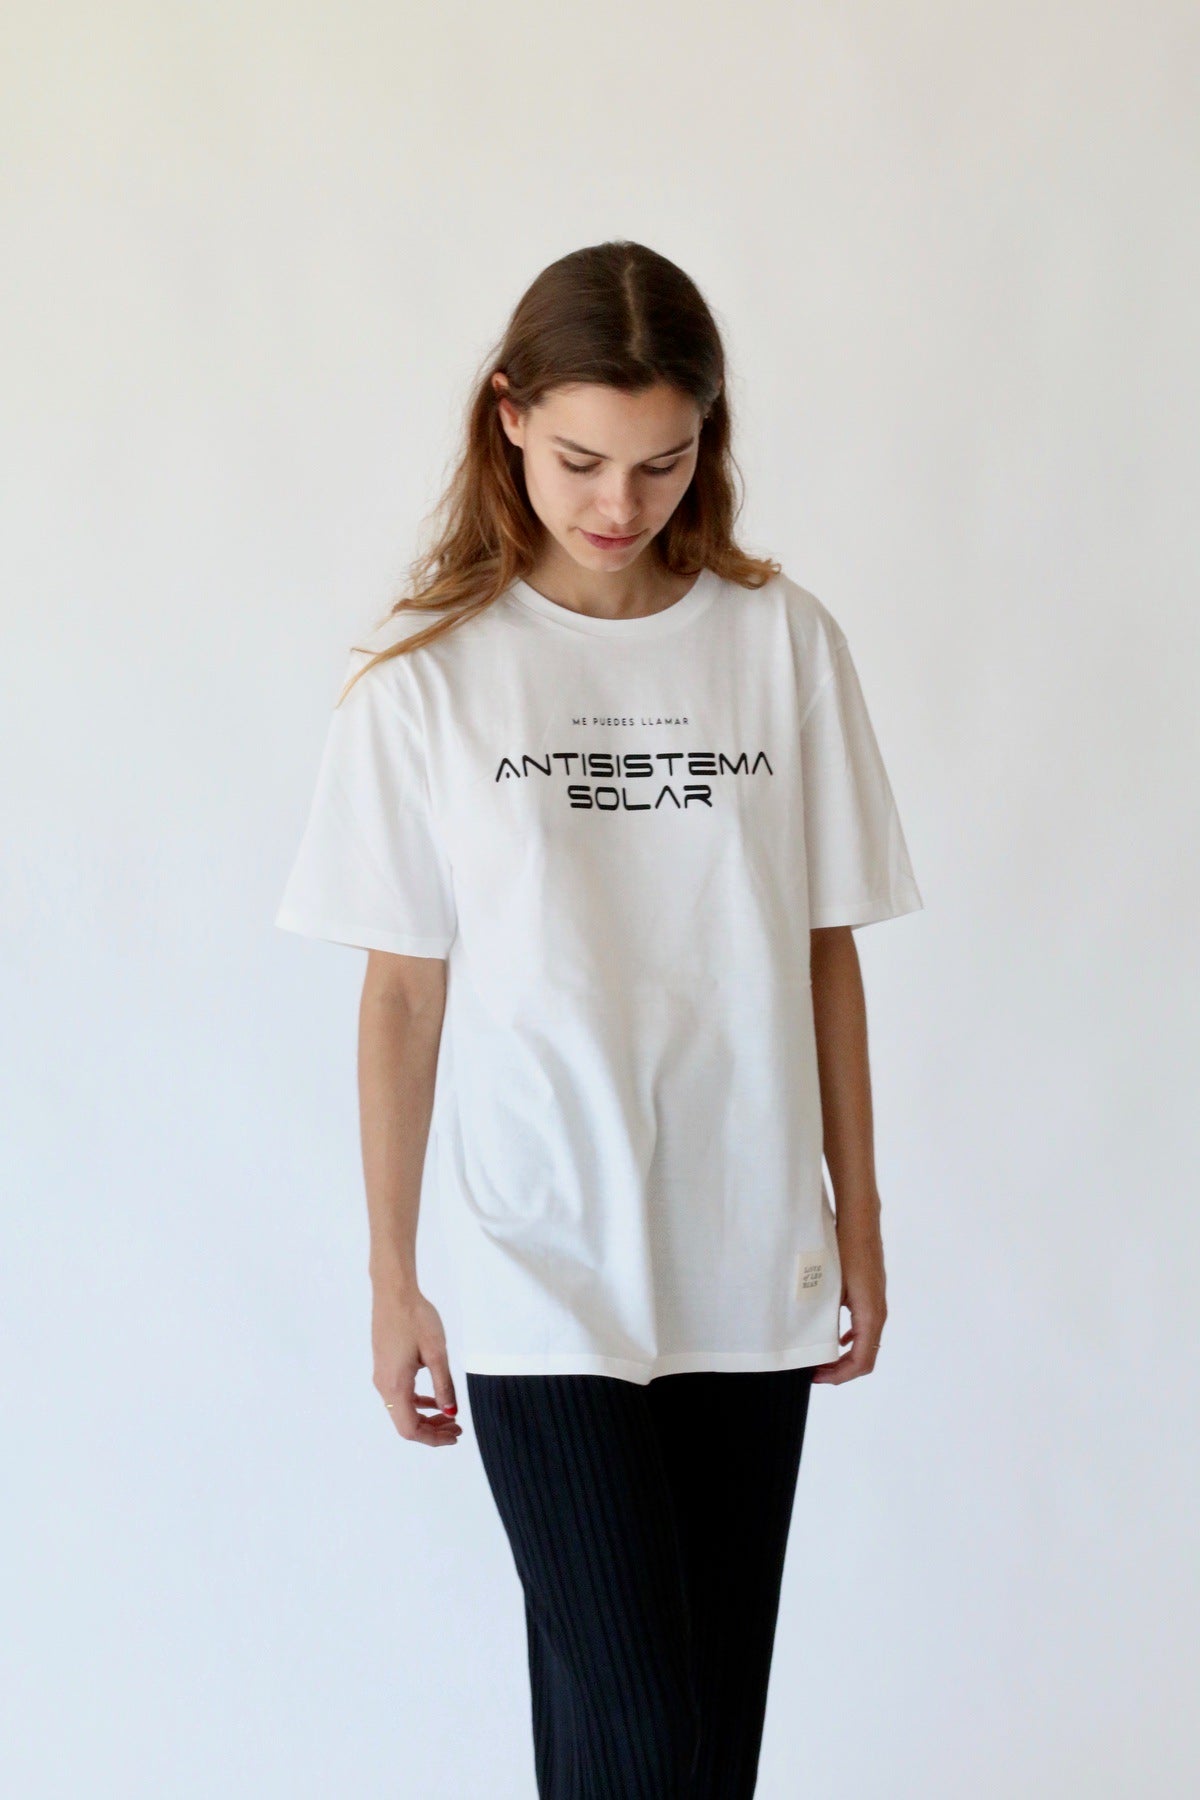 Camiseta Antisistema Solar (Mujer)